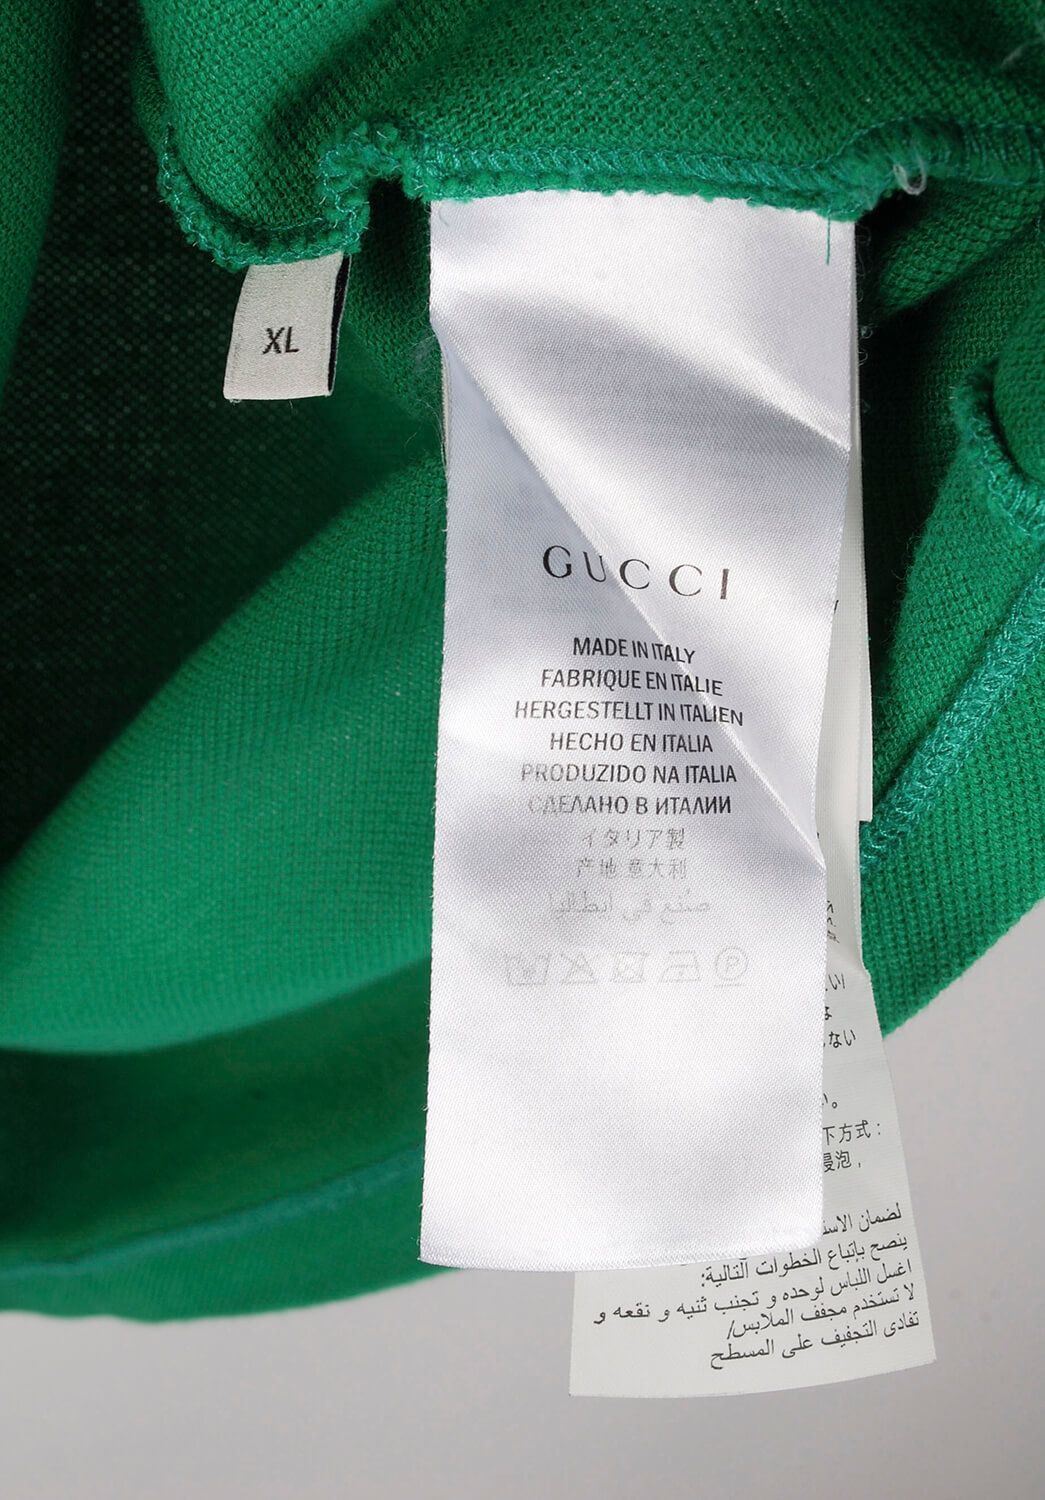 Gucci polo t-shirt